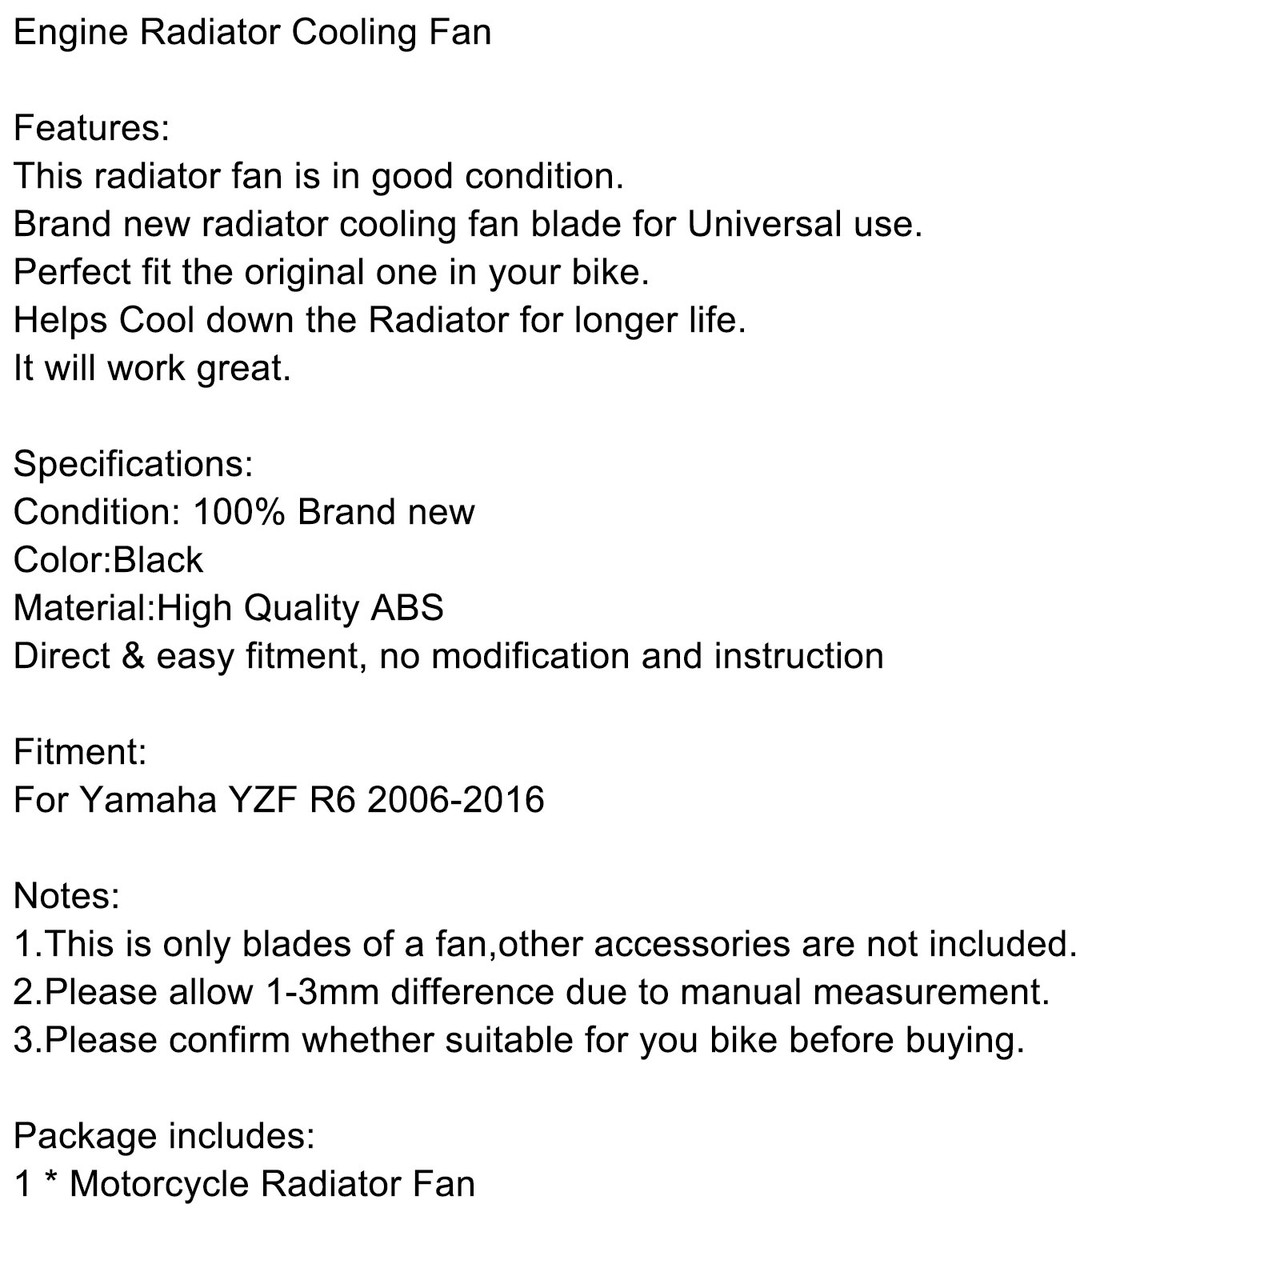 Engine Radiator Cooling Fan Blade For Yamaha YZF R6 YZF-R6 2006-2016